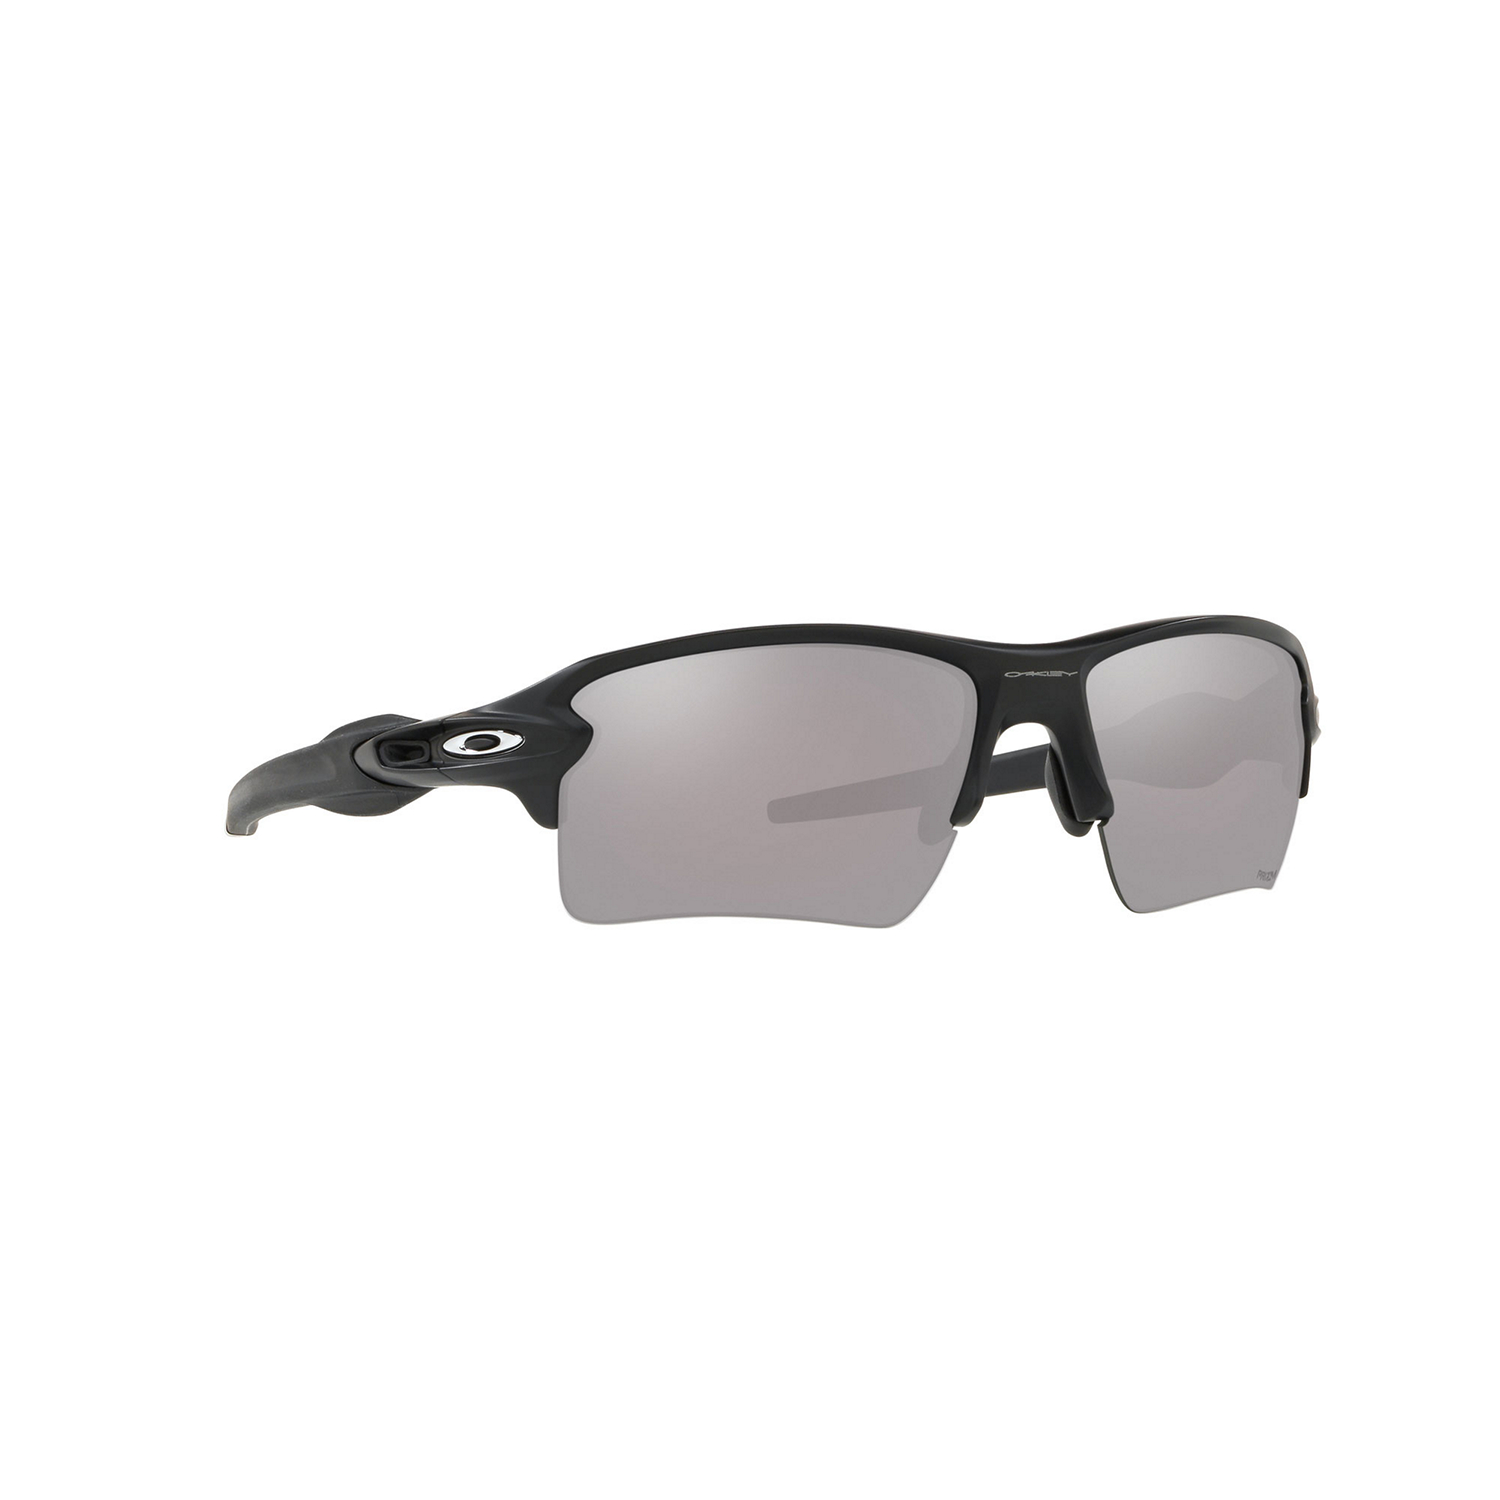 FLAK 2.0 XL Rectangle Sunglasses